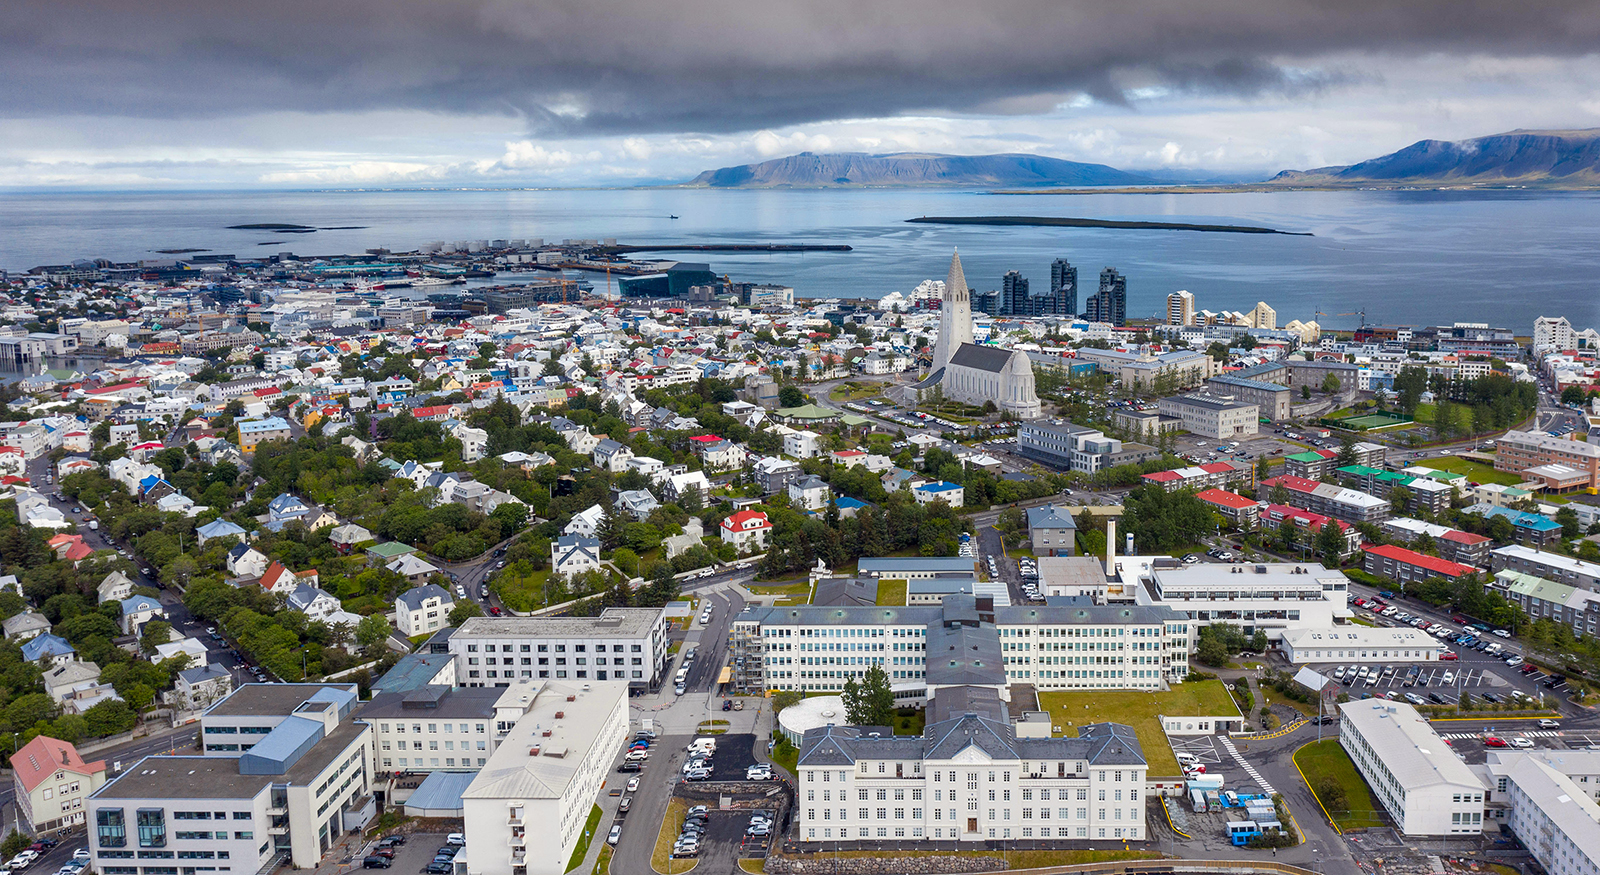 Aerial view of Reykjavik, Iceland. (Photo by Einar H. Reynis/Unsplash/Creative Commons)